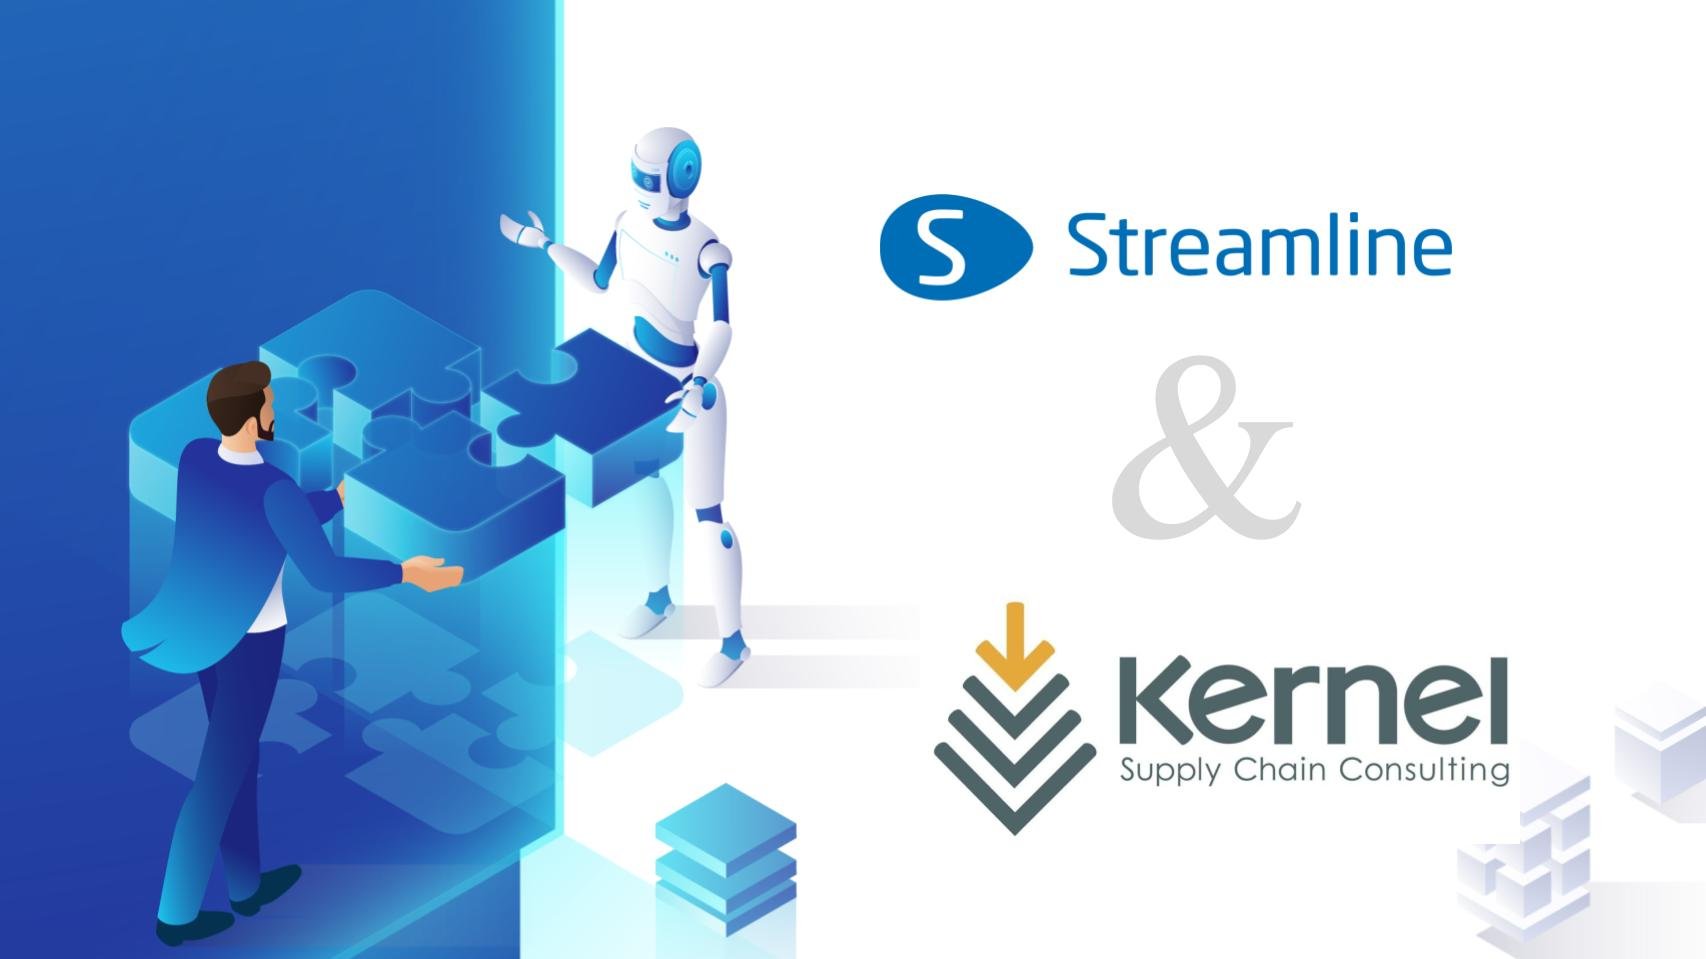 GMDH Streamline a Kernel Supply Chain Consulting oznamují cenné partnerství